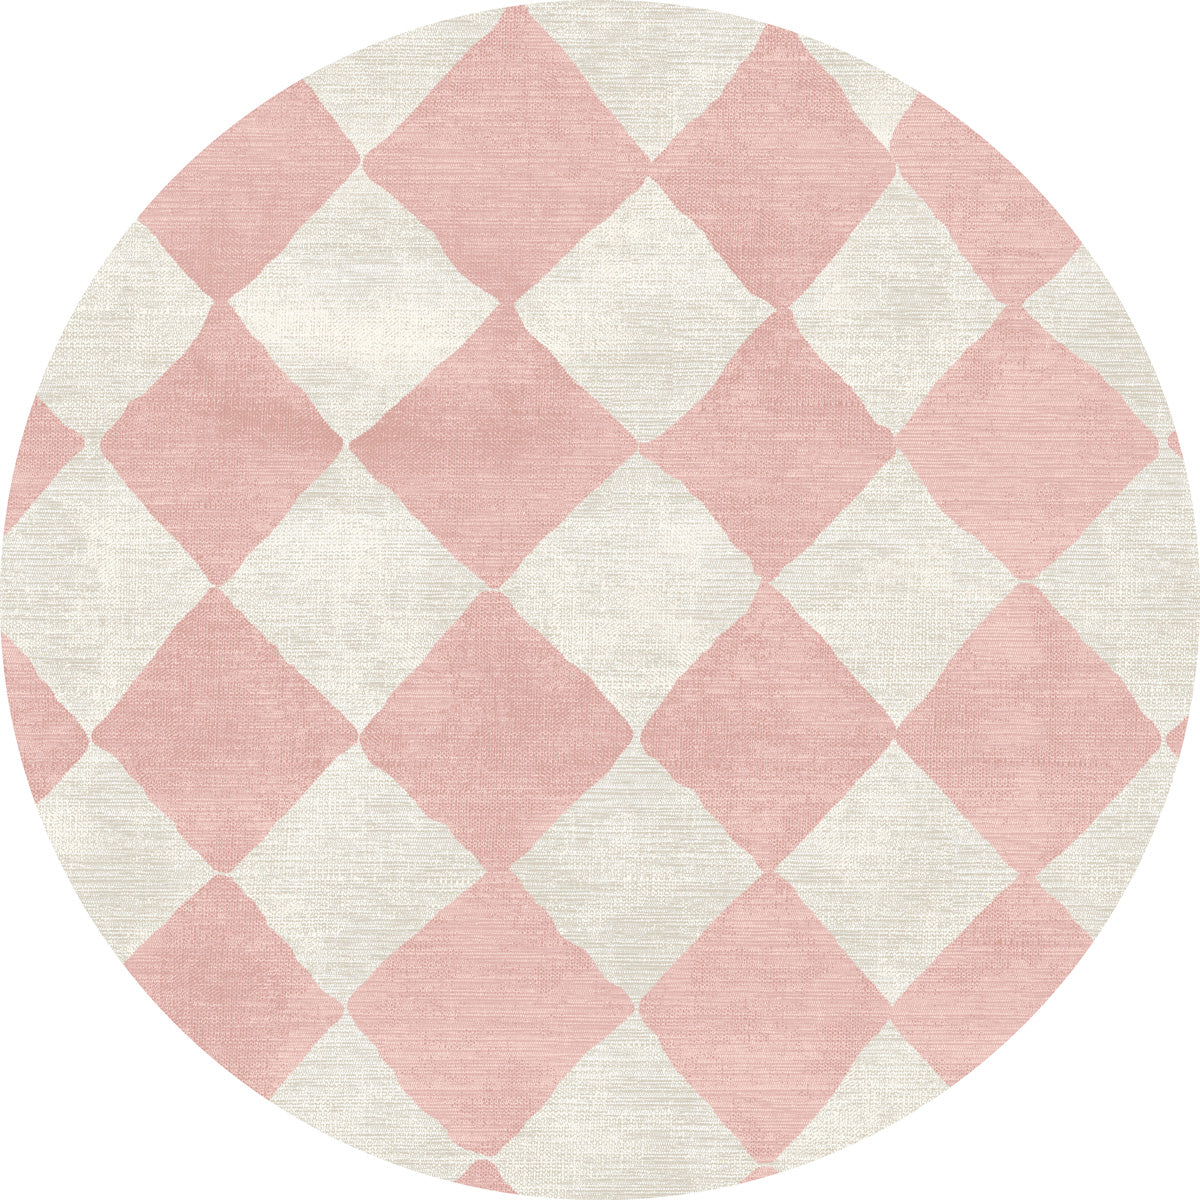 Trestres Checkered Malibu Pink & Ivory Rug